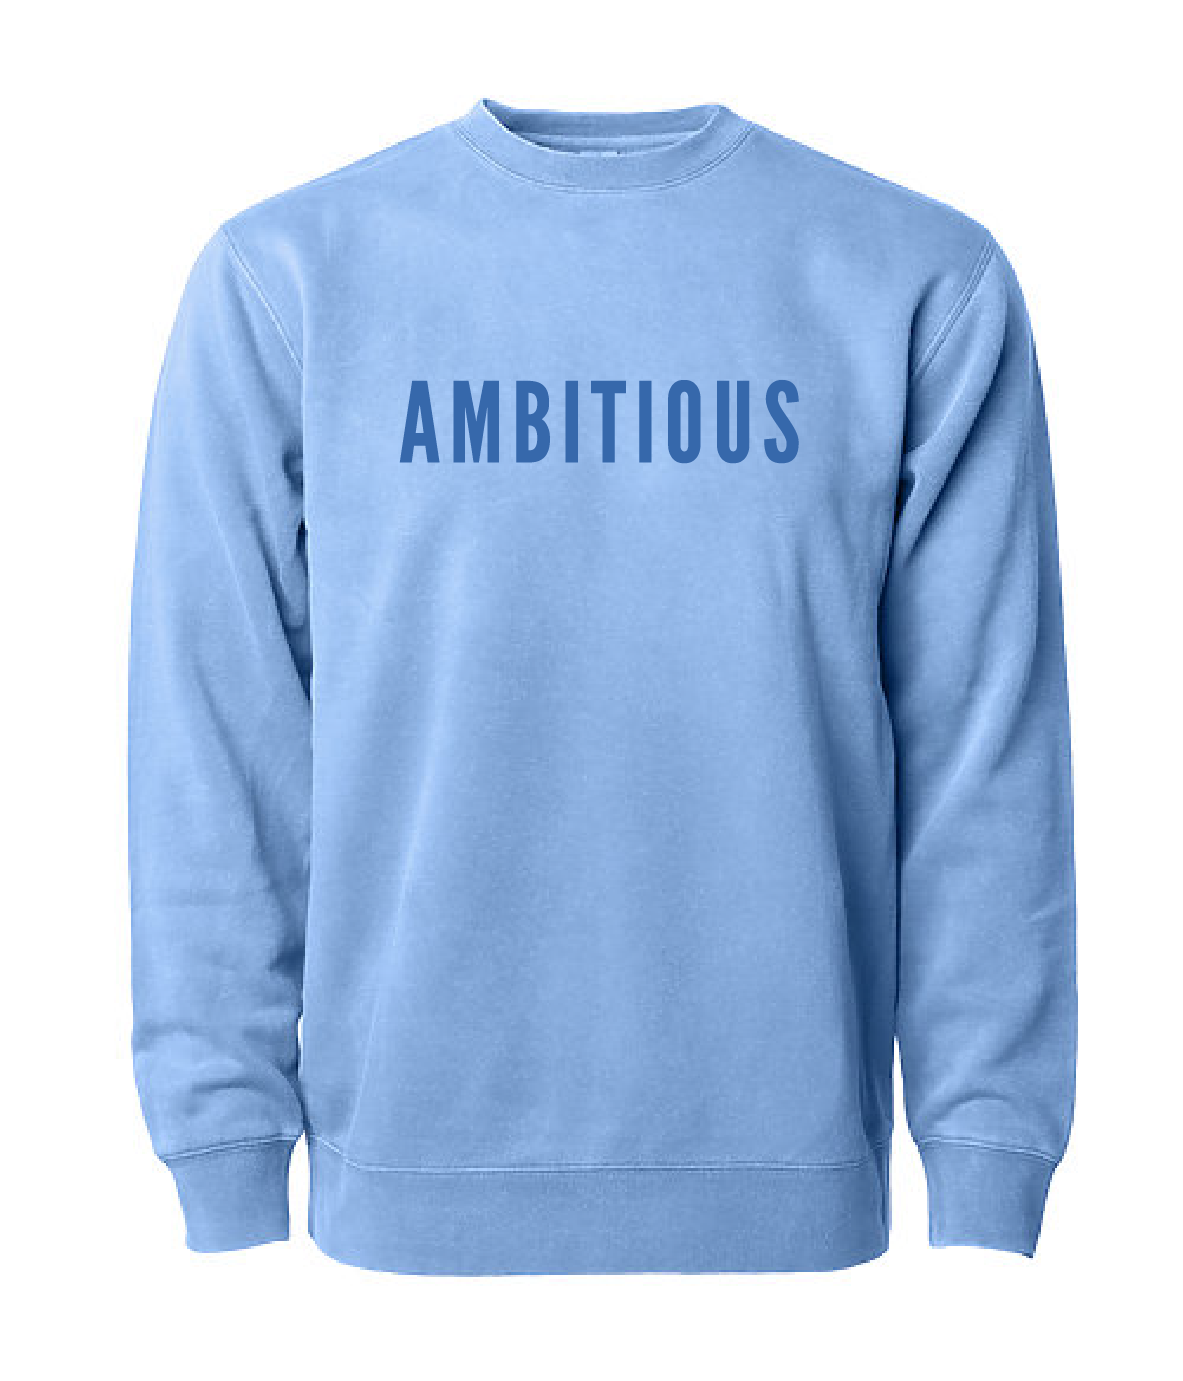 Ambitious Soft Garment Dye Crewneck Sweatshirt (Light Blue)